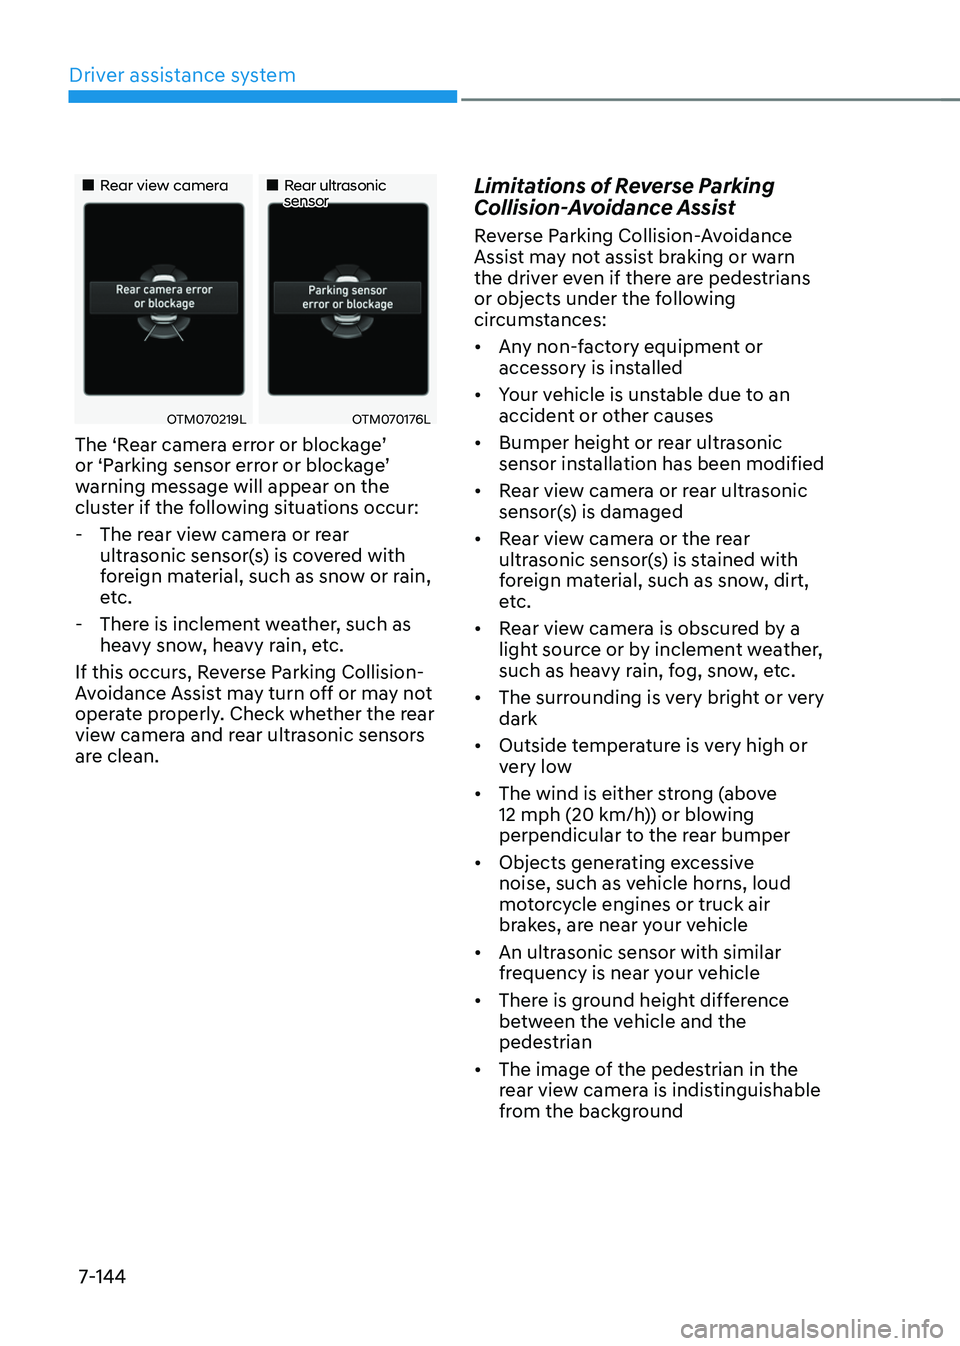 HYUNDAI TUCSON HYBRID 2021  Owners Manual Driver assistance system
7-144
„„Rear view camera„„Rear ultrasonic sensor
OTM070219LOTM070176L
The	‘Rear	camera	error	or	blockage’	or	‘P
arking	sensor	err or	or	block age’	